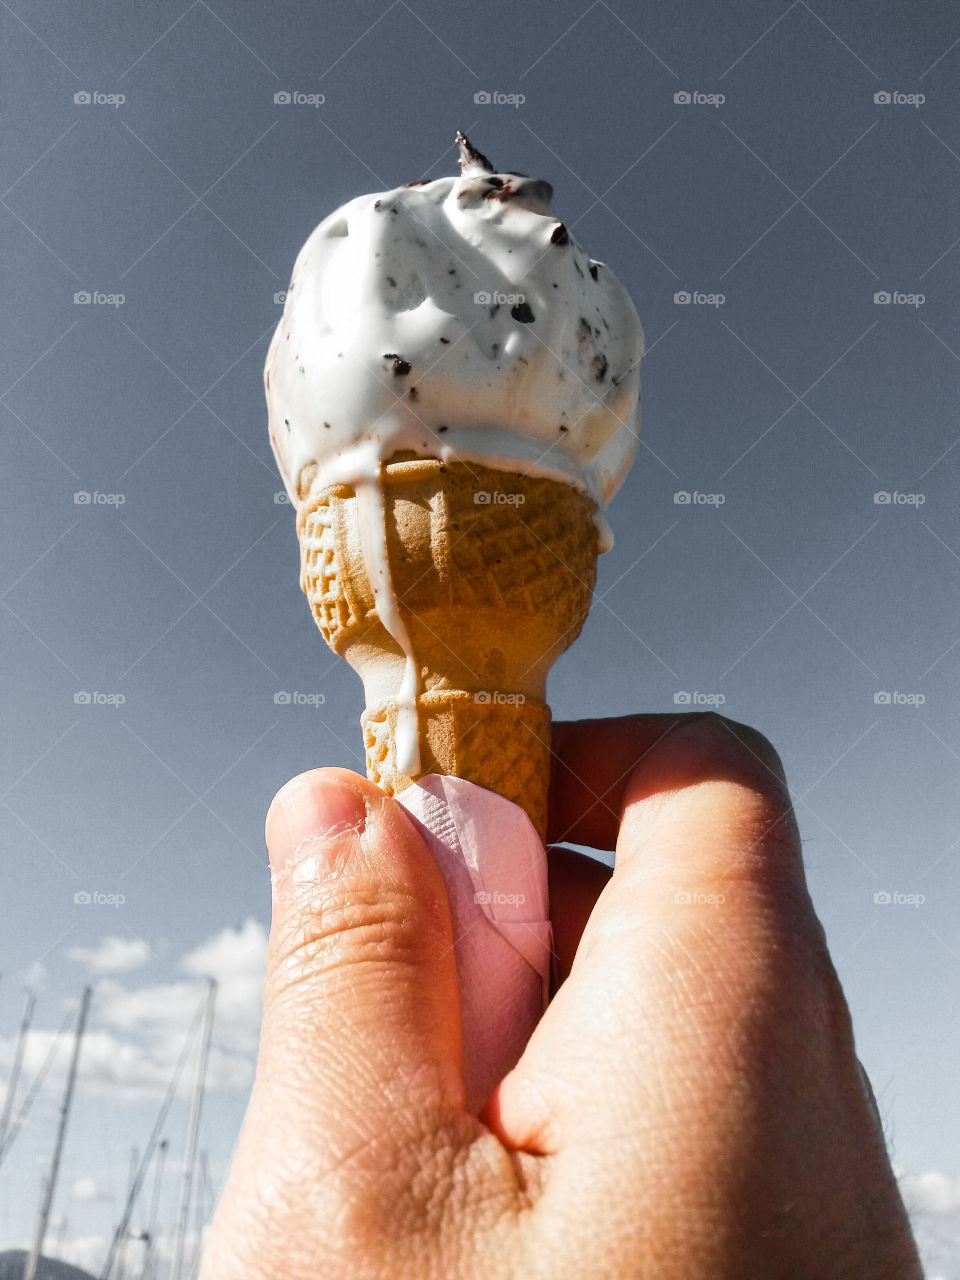 A hand's holding ice cream